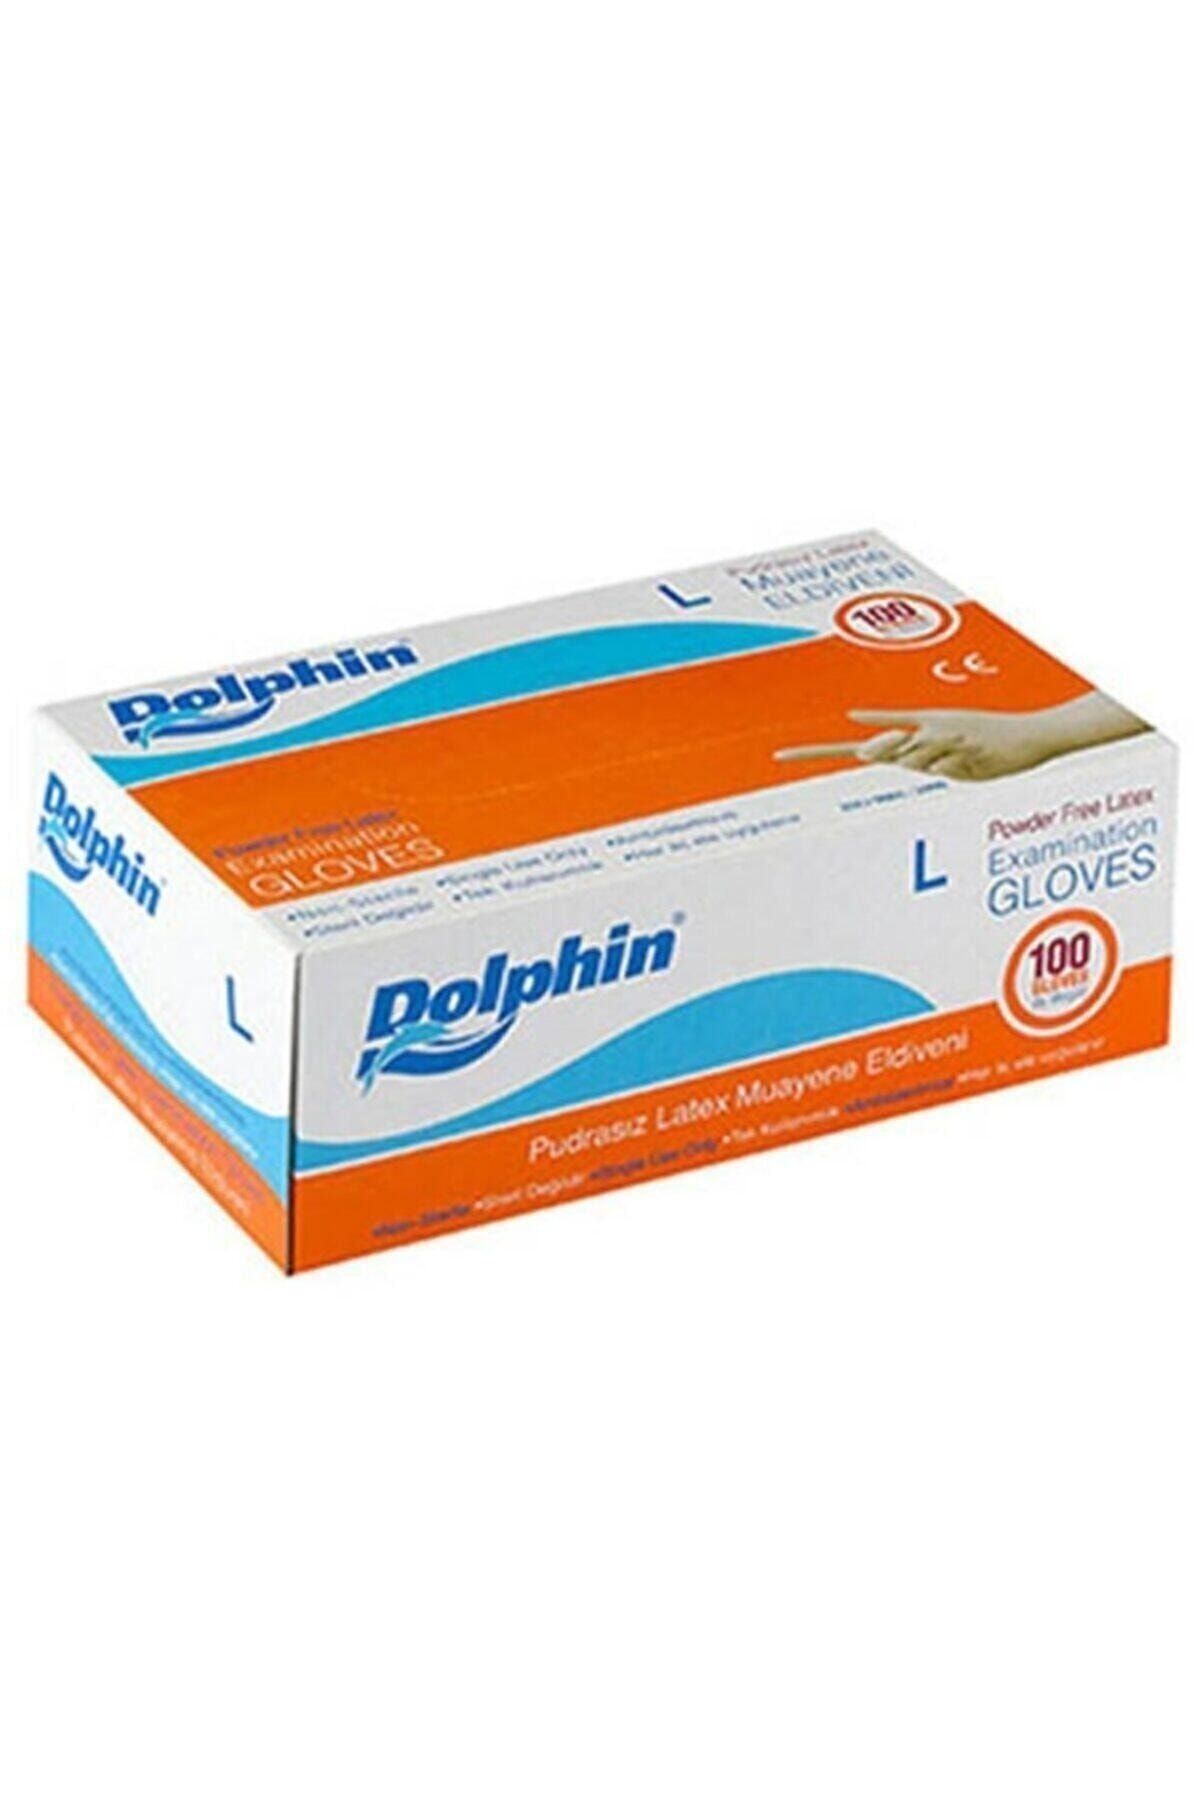 Dolphin Beyaz Lateks Eldiven Pudrasız (L) 100lü Paket - Tm-eld-0020 8697415741448